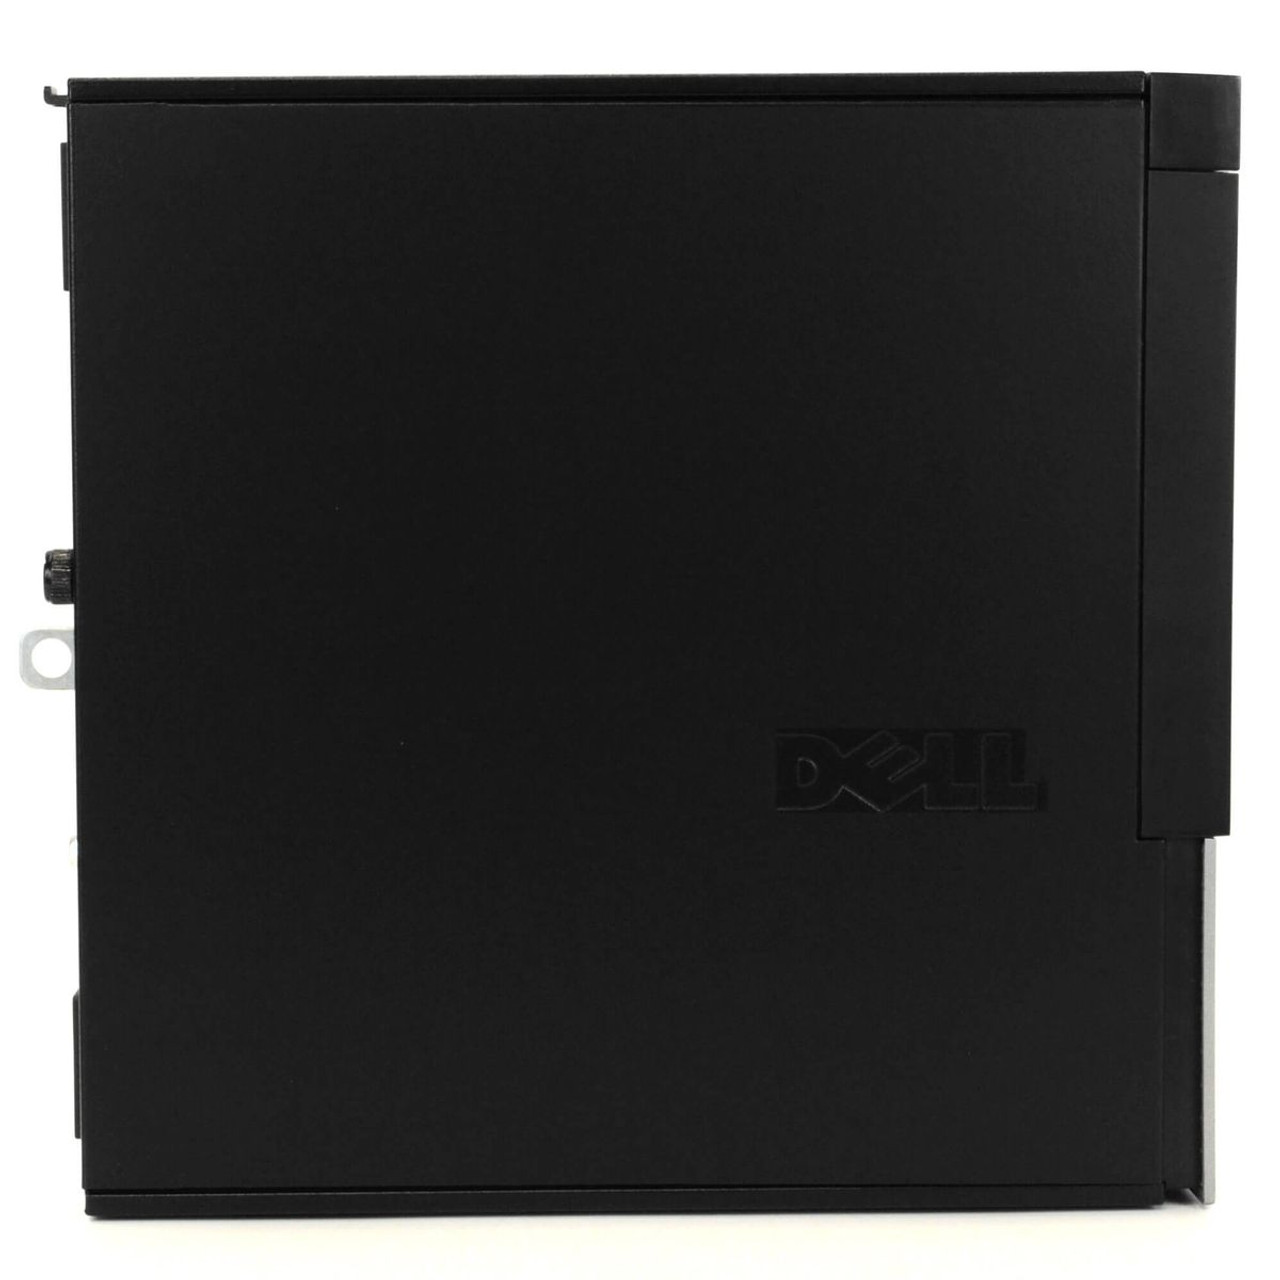 Dell Optiplex 9020 Desktop Computer product image